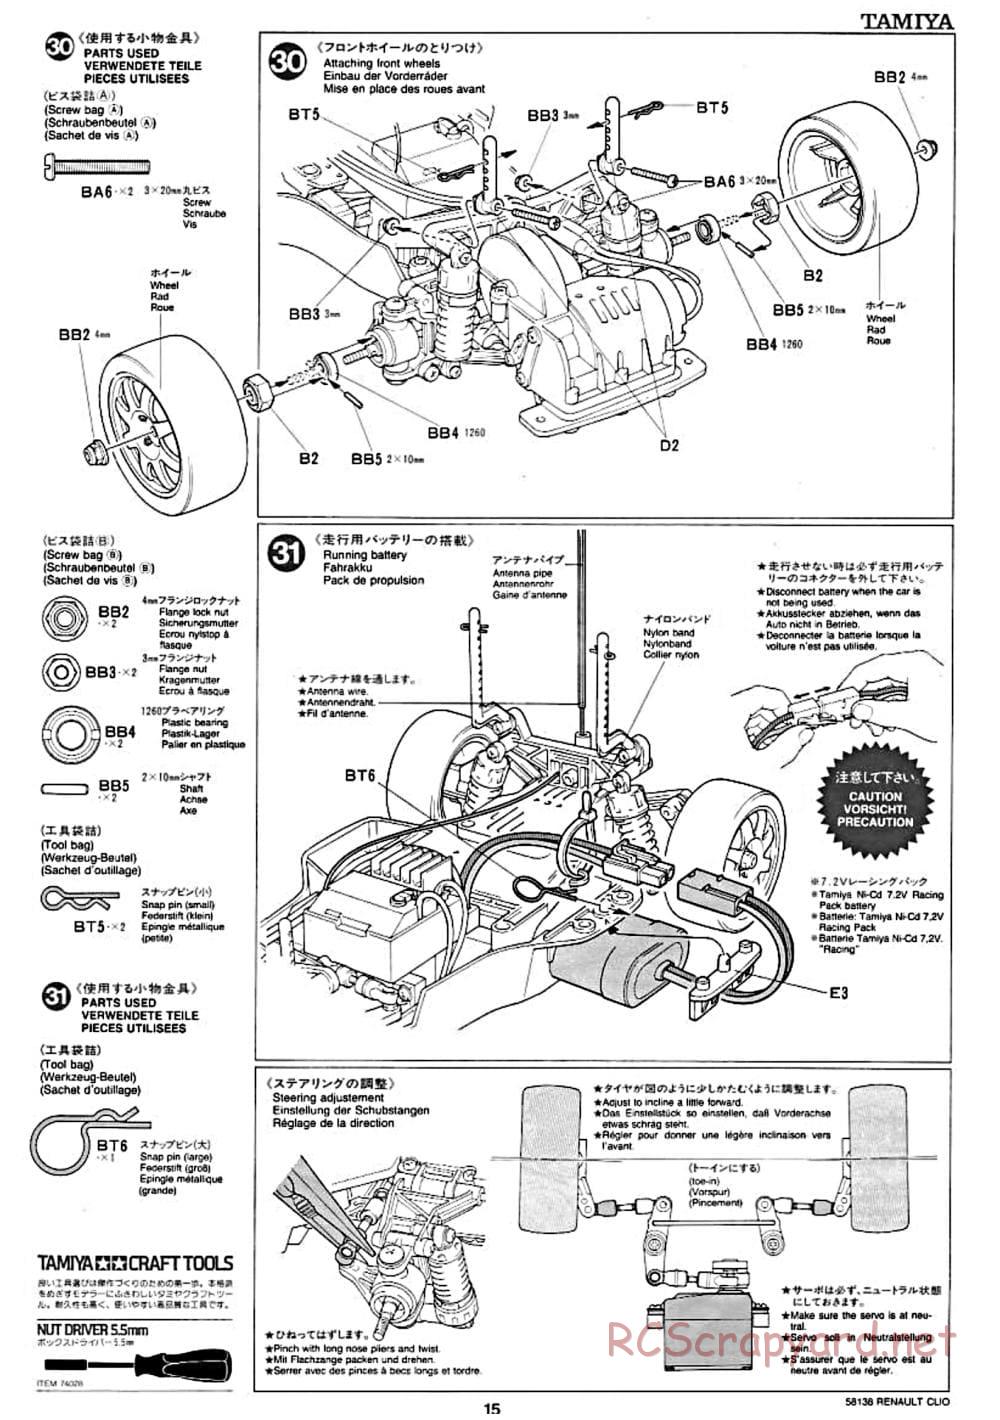 Tamiya - Renault Clio Williams Chassis - Manual - Page 15